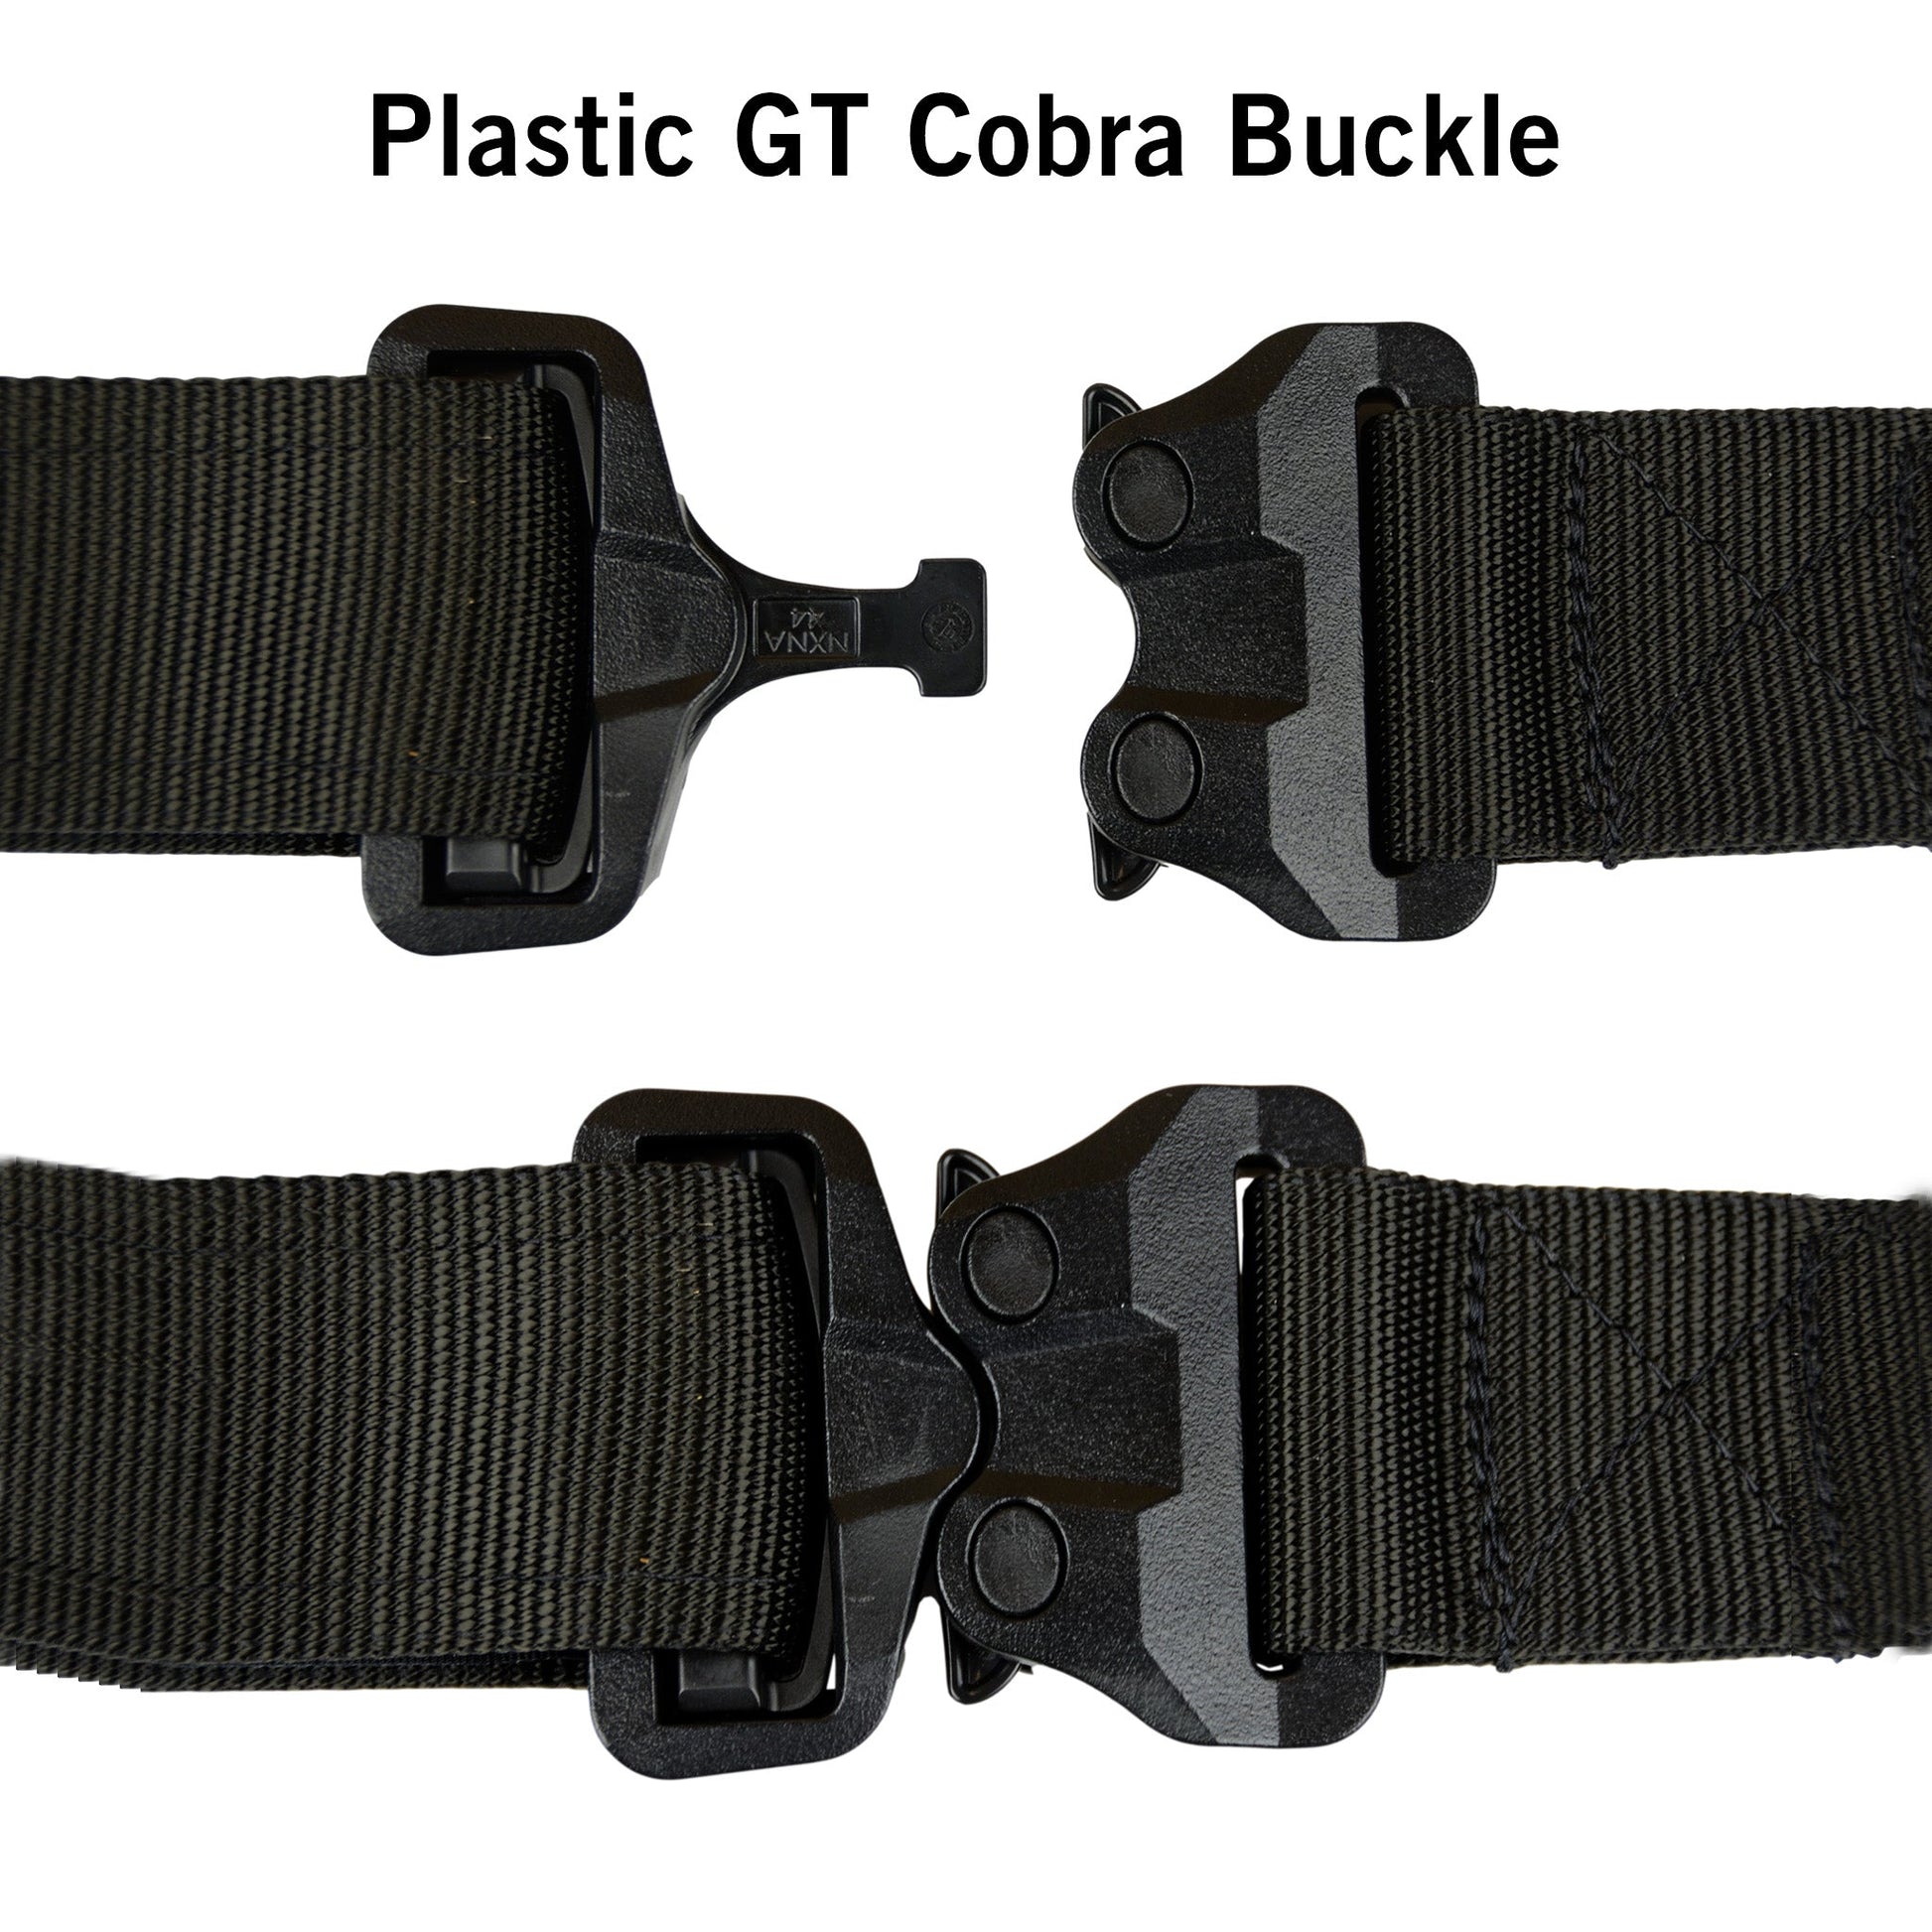 2″ GT Cobra Dual-Adjustable Buckle